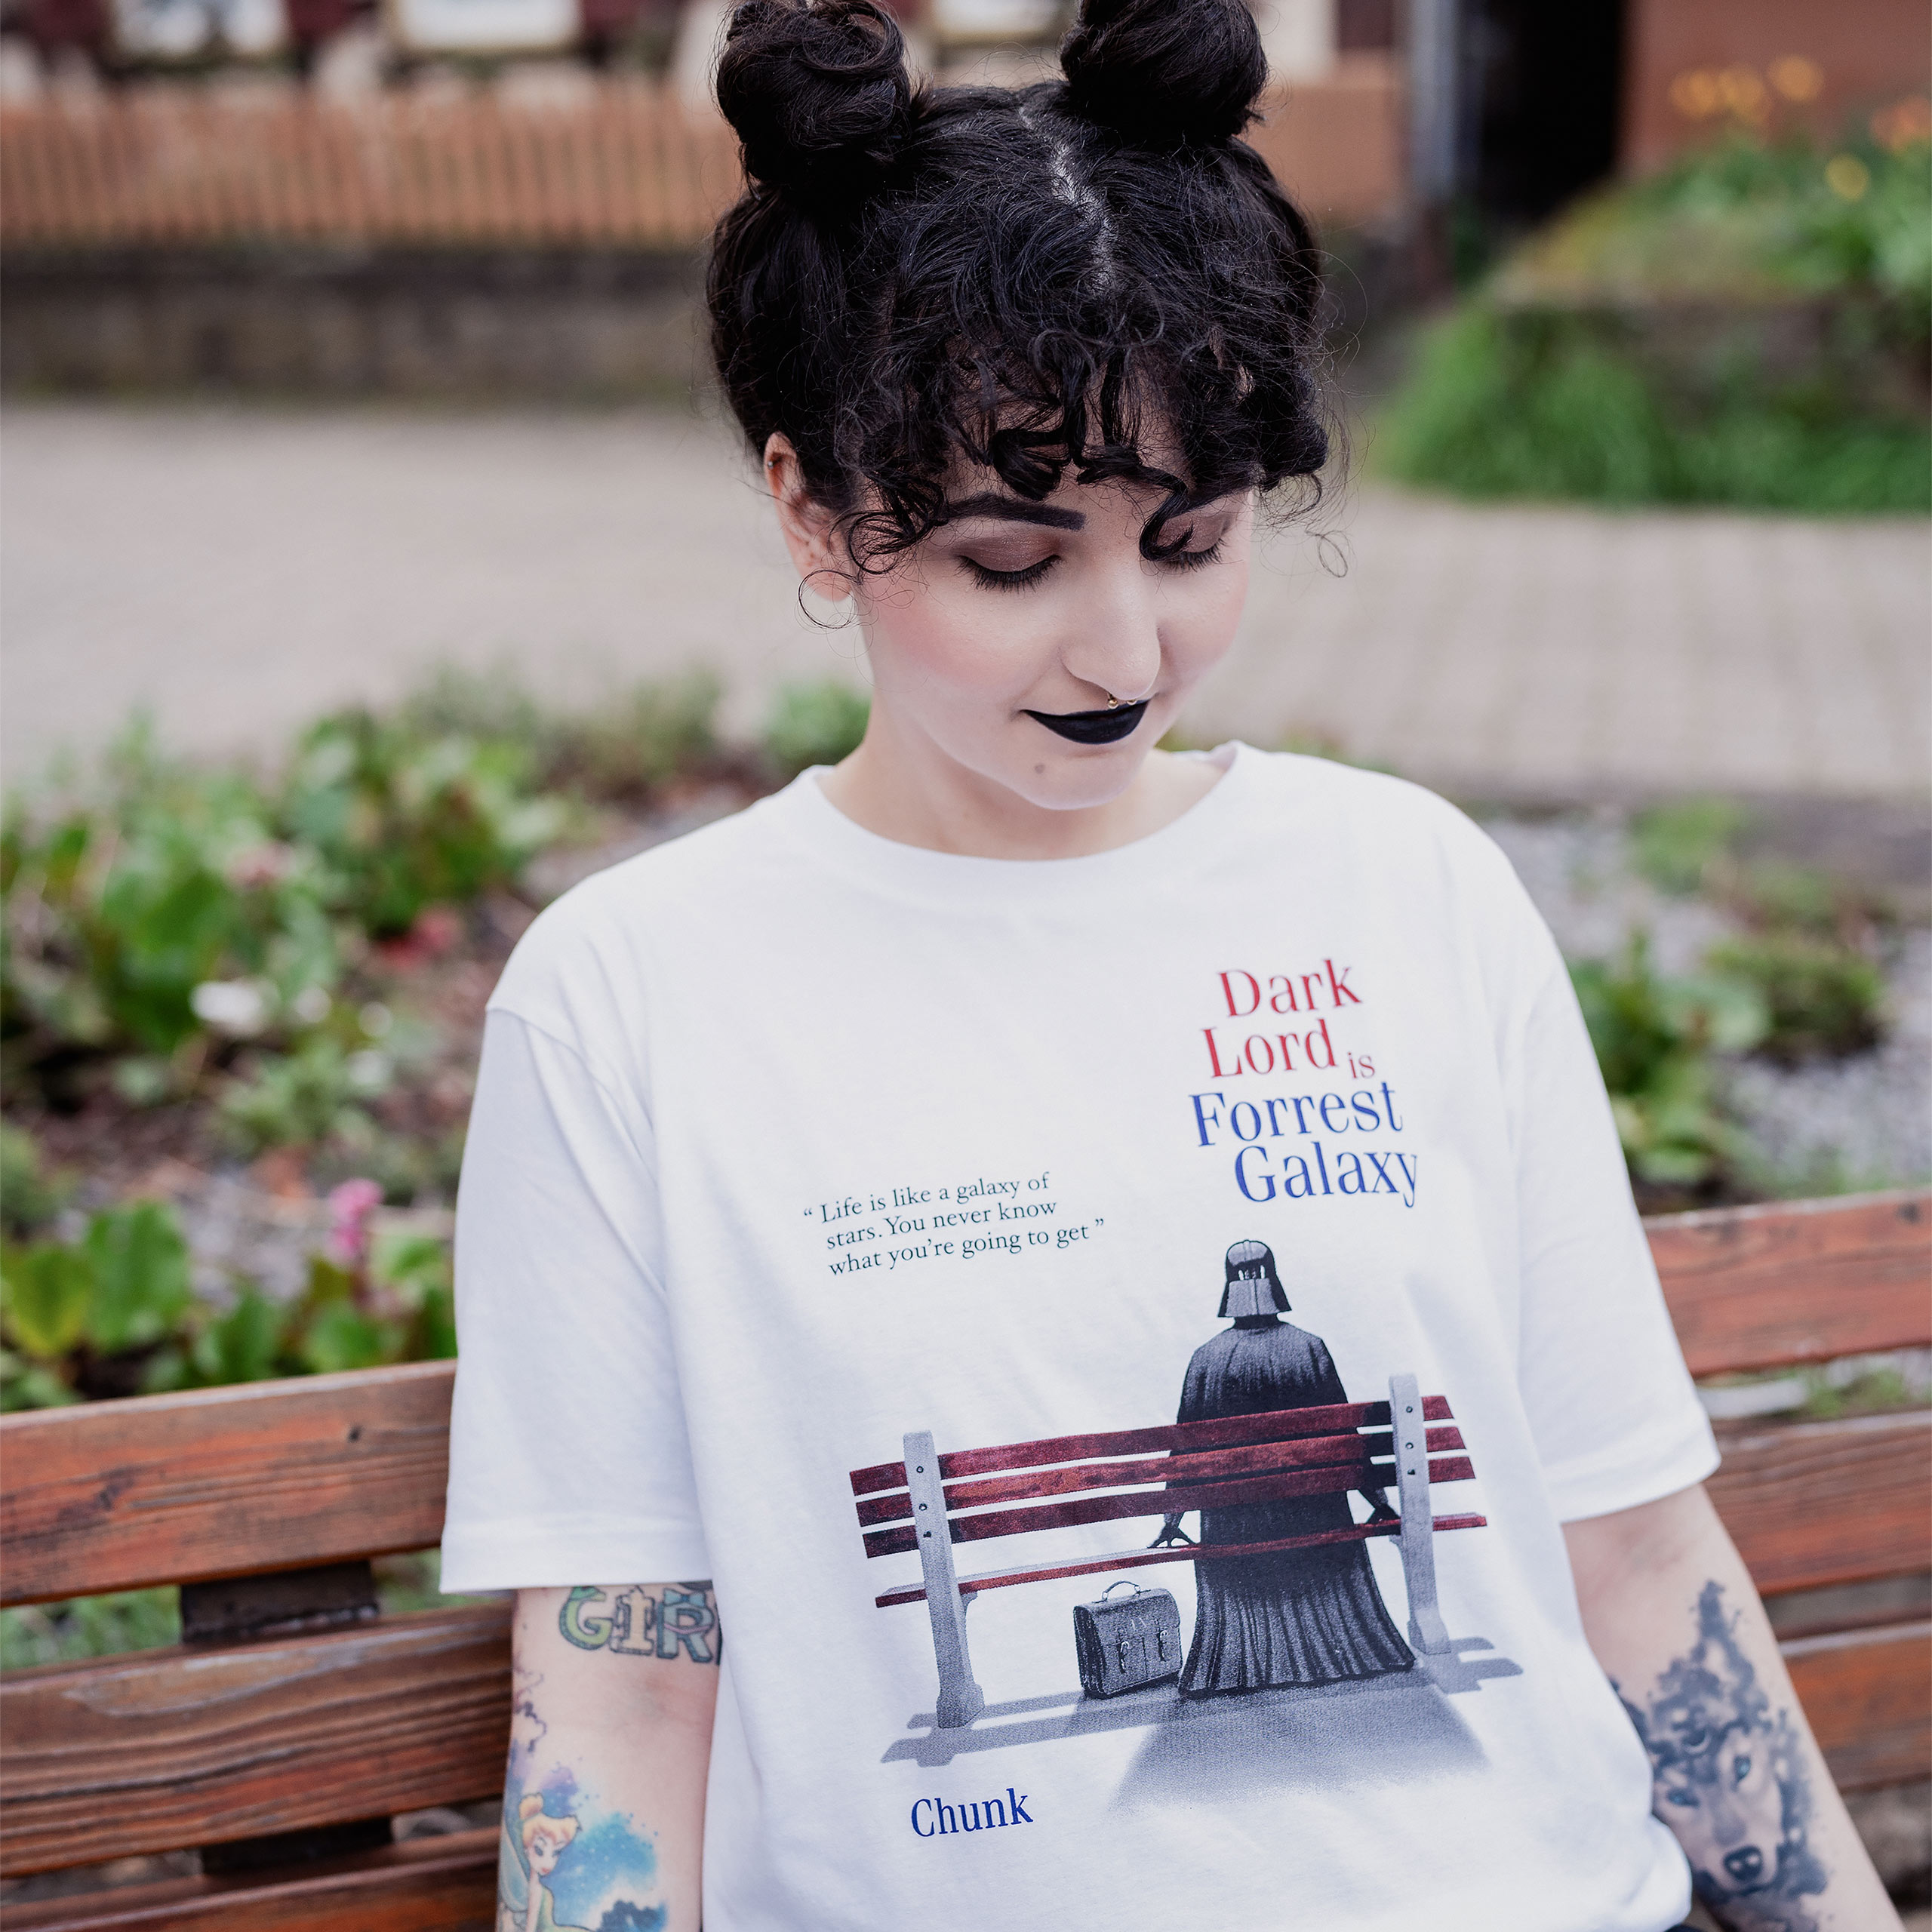 Dark Lord is Forrest Galaxy T-Shirt voor Star Wars fans wit